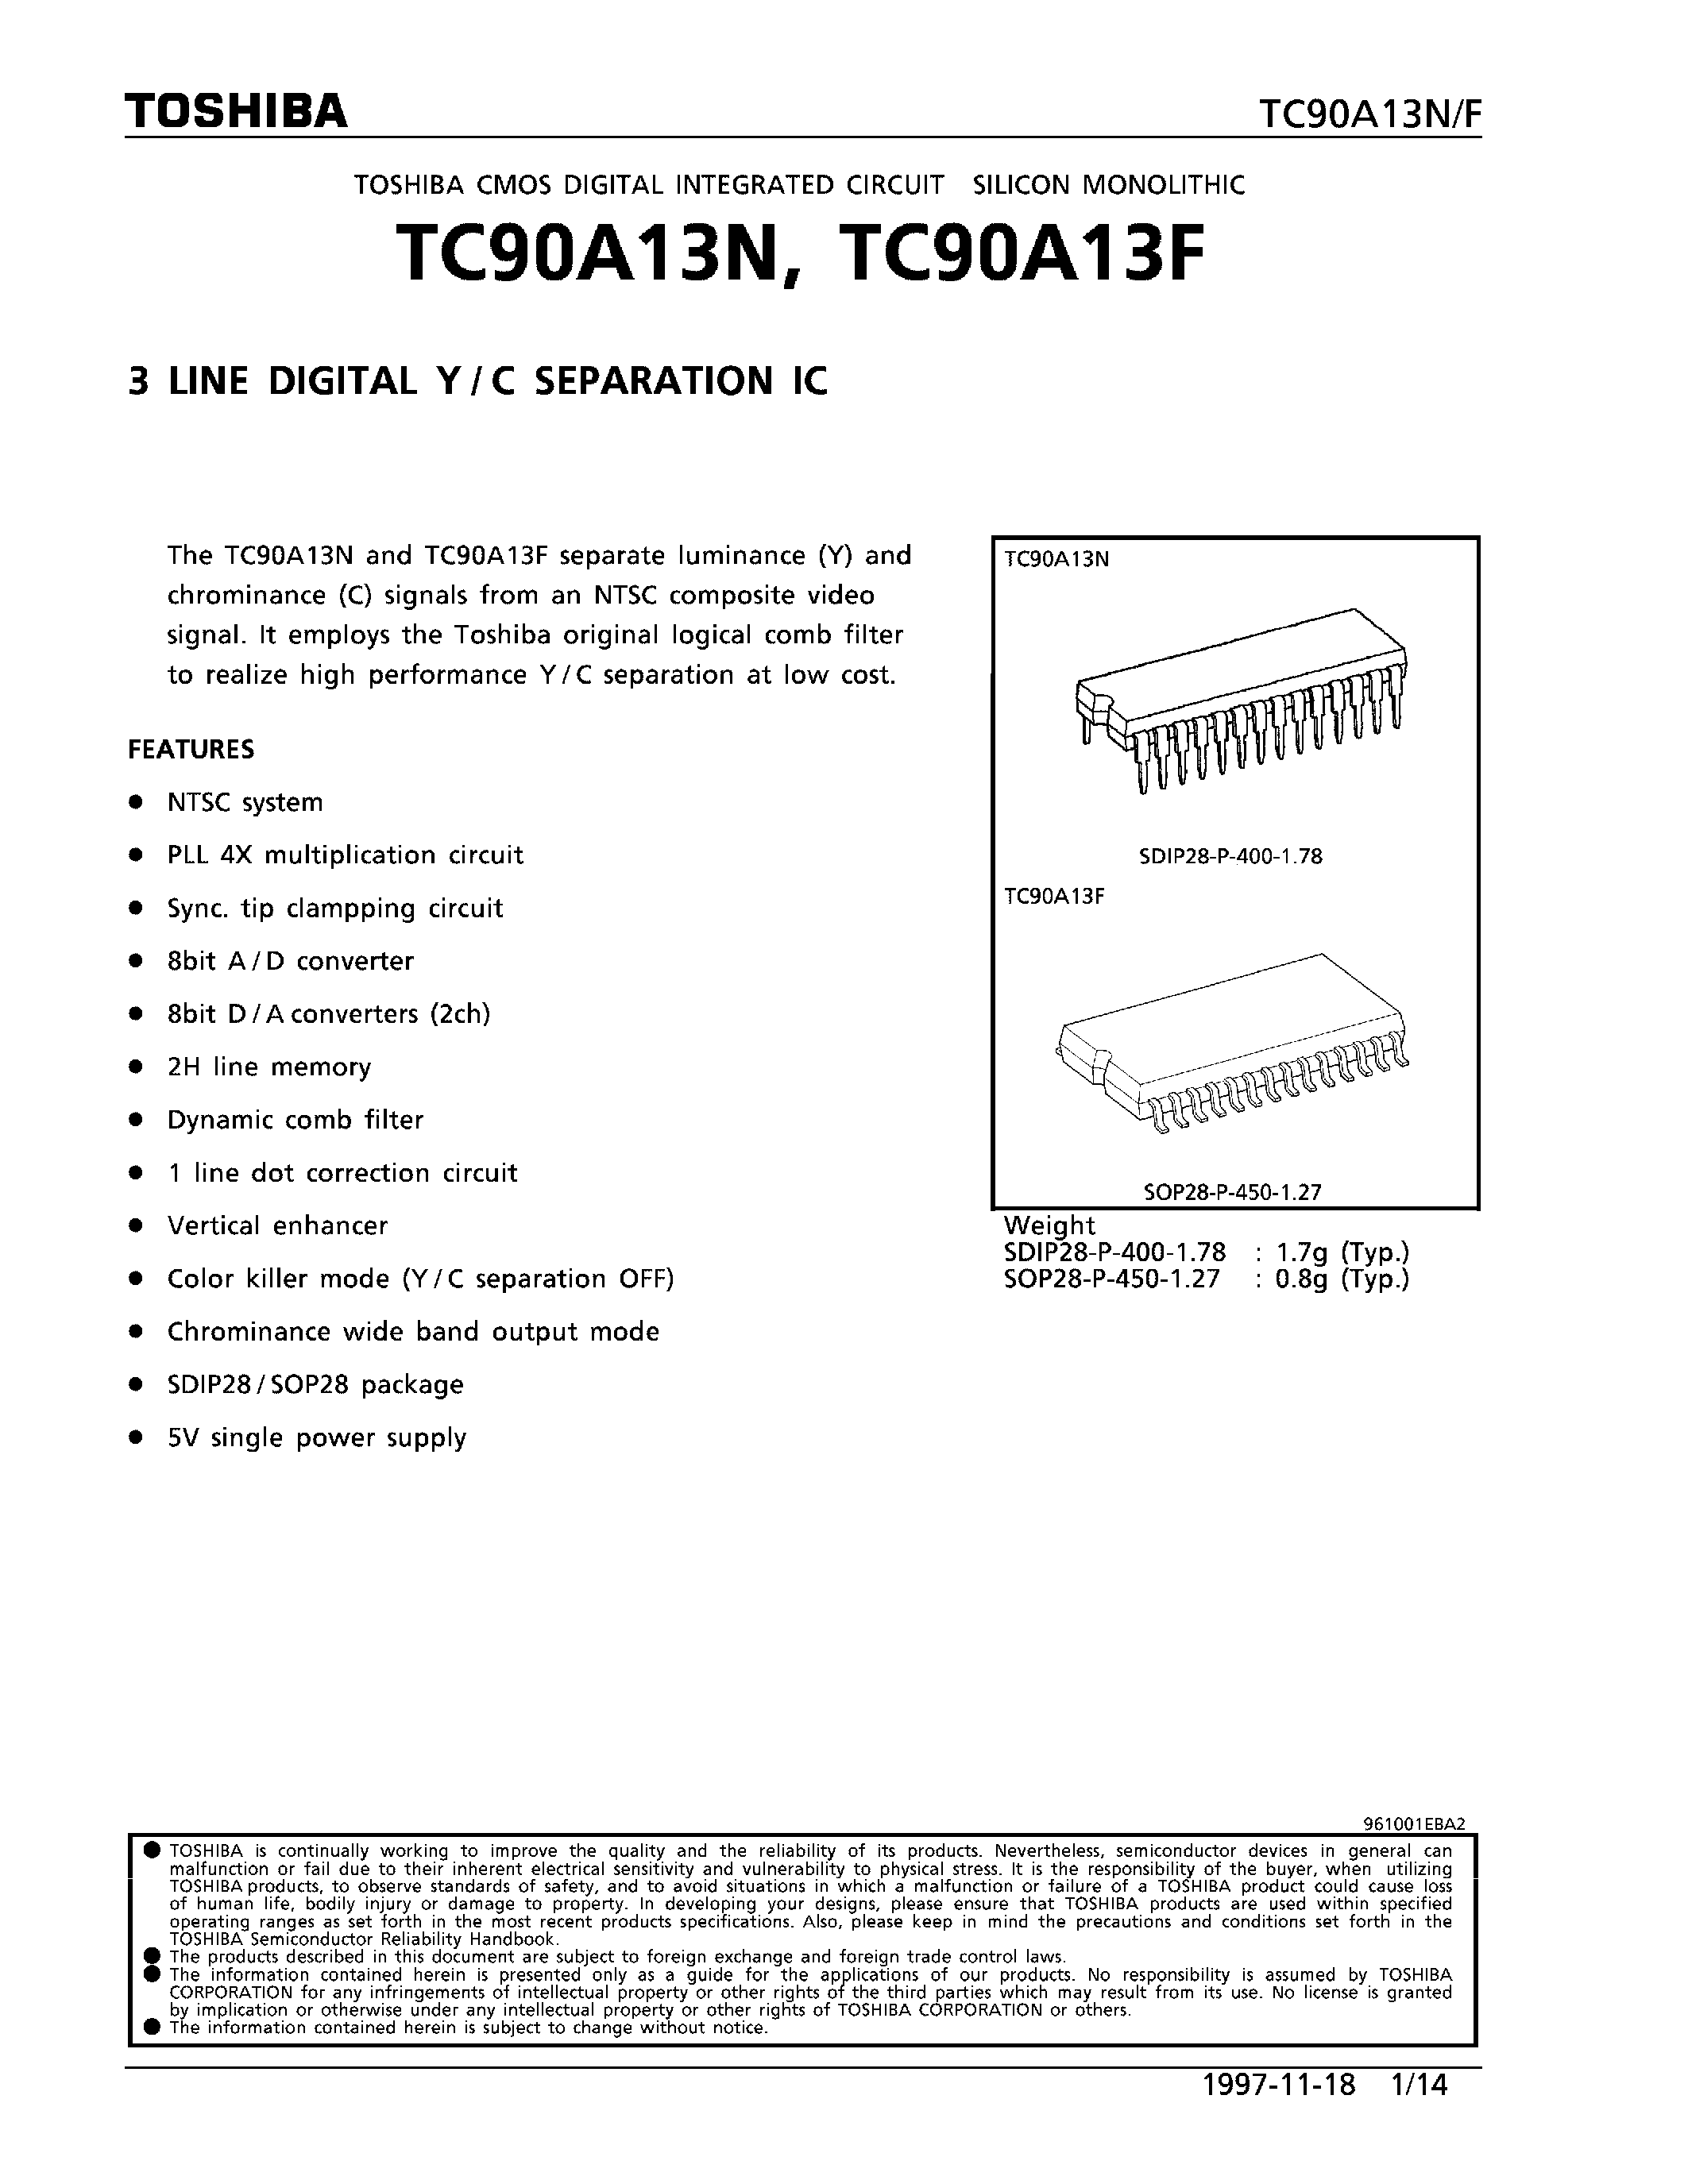 Datasheet TC90A13F - 3 LINE DIGITAL Y/C SEPARATION IC page 1